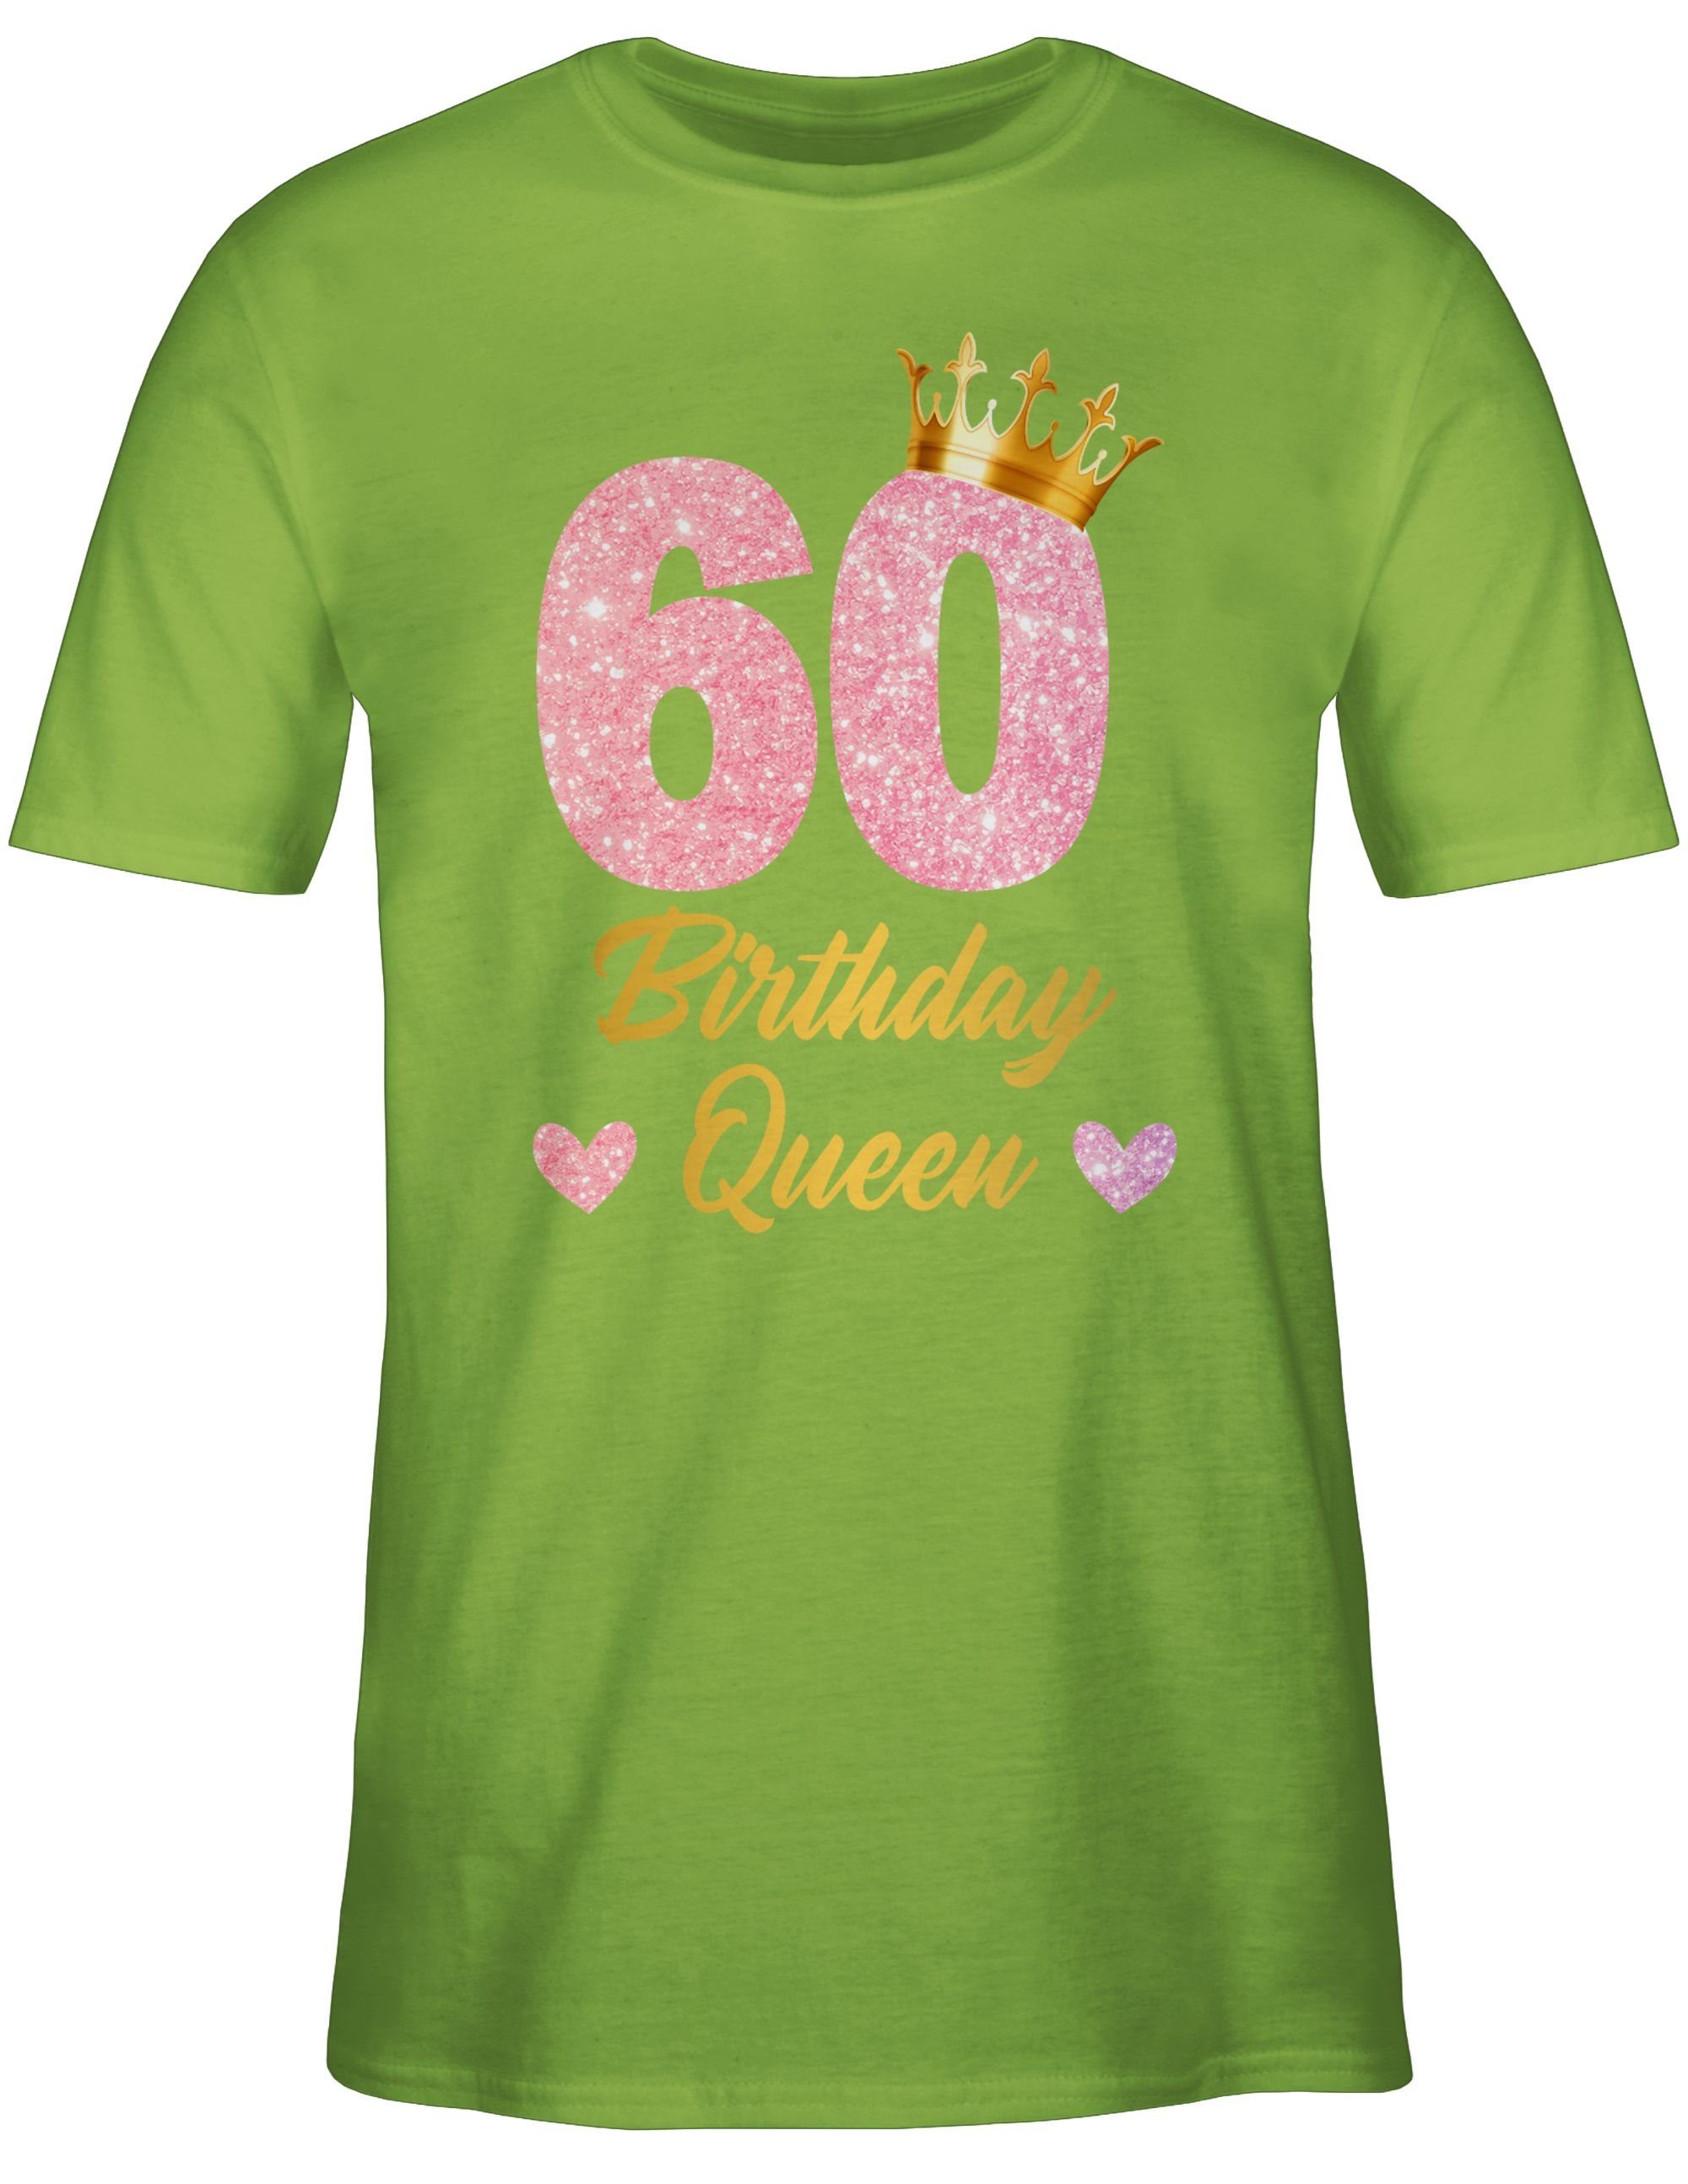 Queen 60. Shirtracer Geburtstag Königin Hellgrün Geburtstagsgeschenk T-Shirt 60 Birthday 02 60 Geburtstags